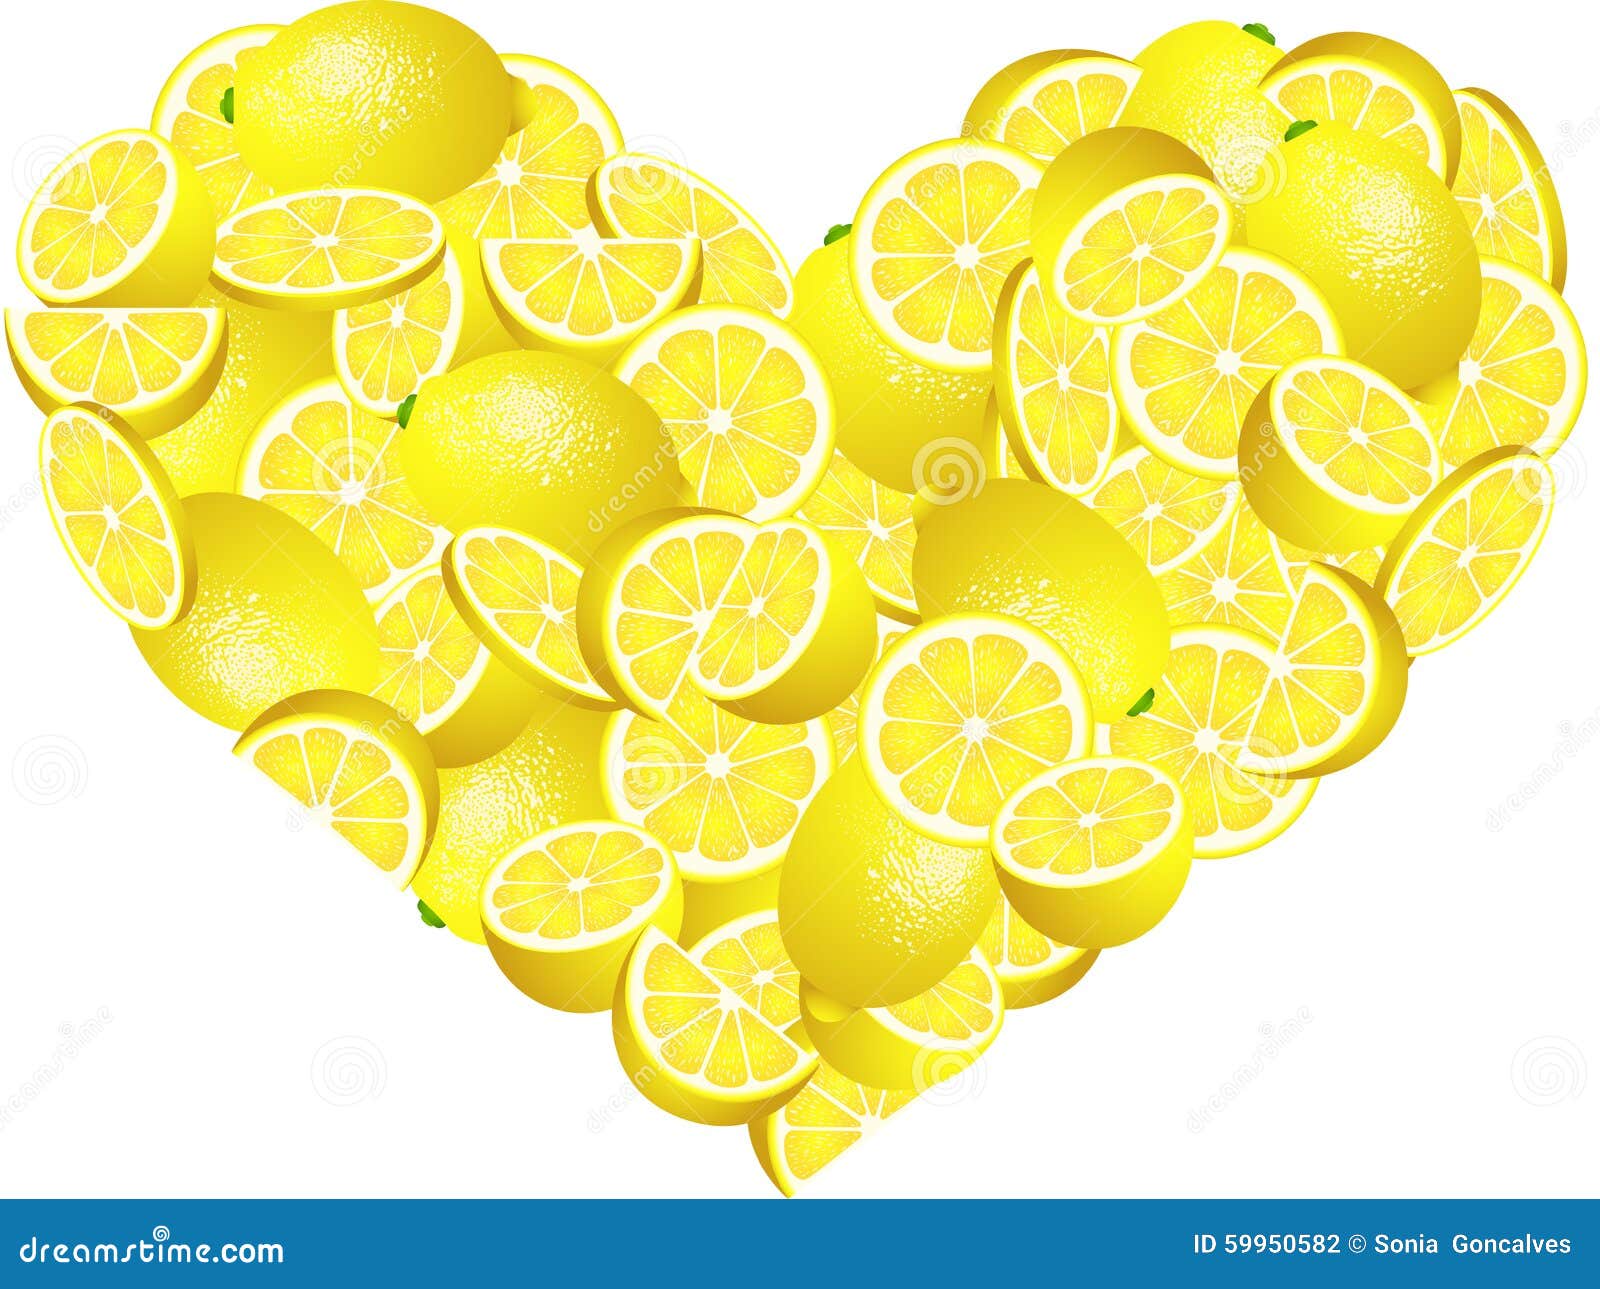 lemon shape clipart - photo #5